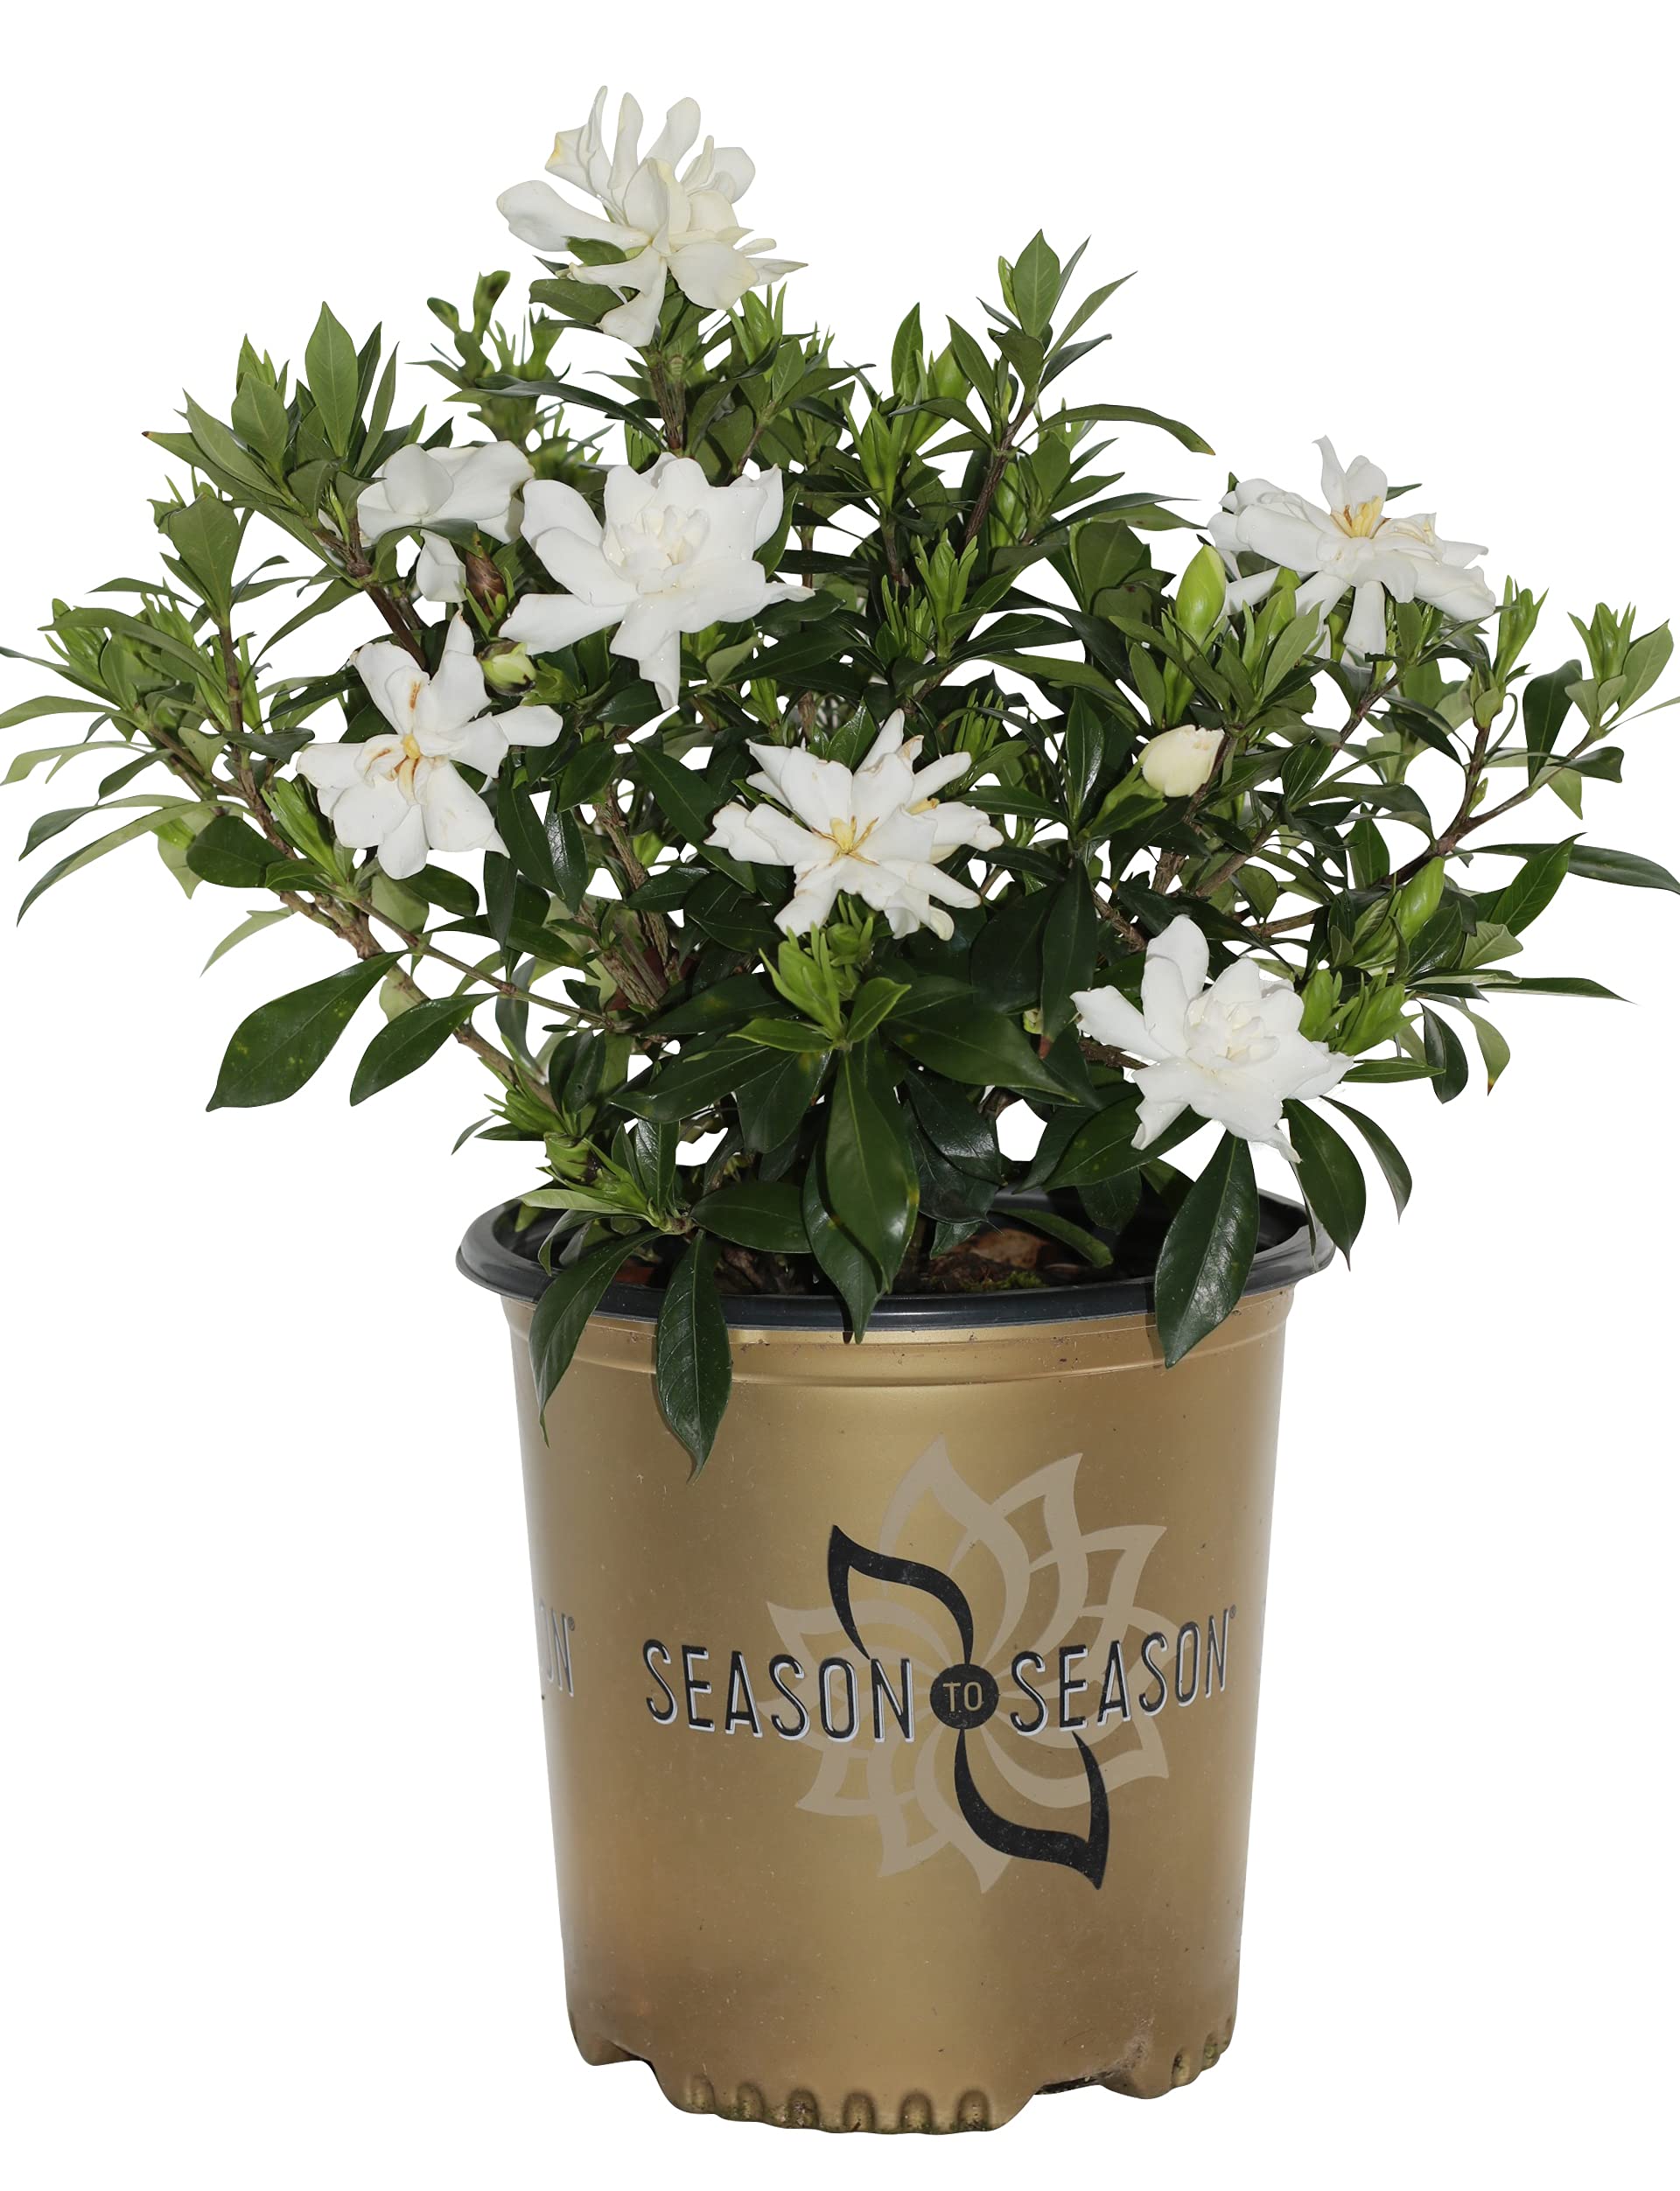 Celestial Star™ White Gardenia Evergreen Shrub - 2 Gallon